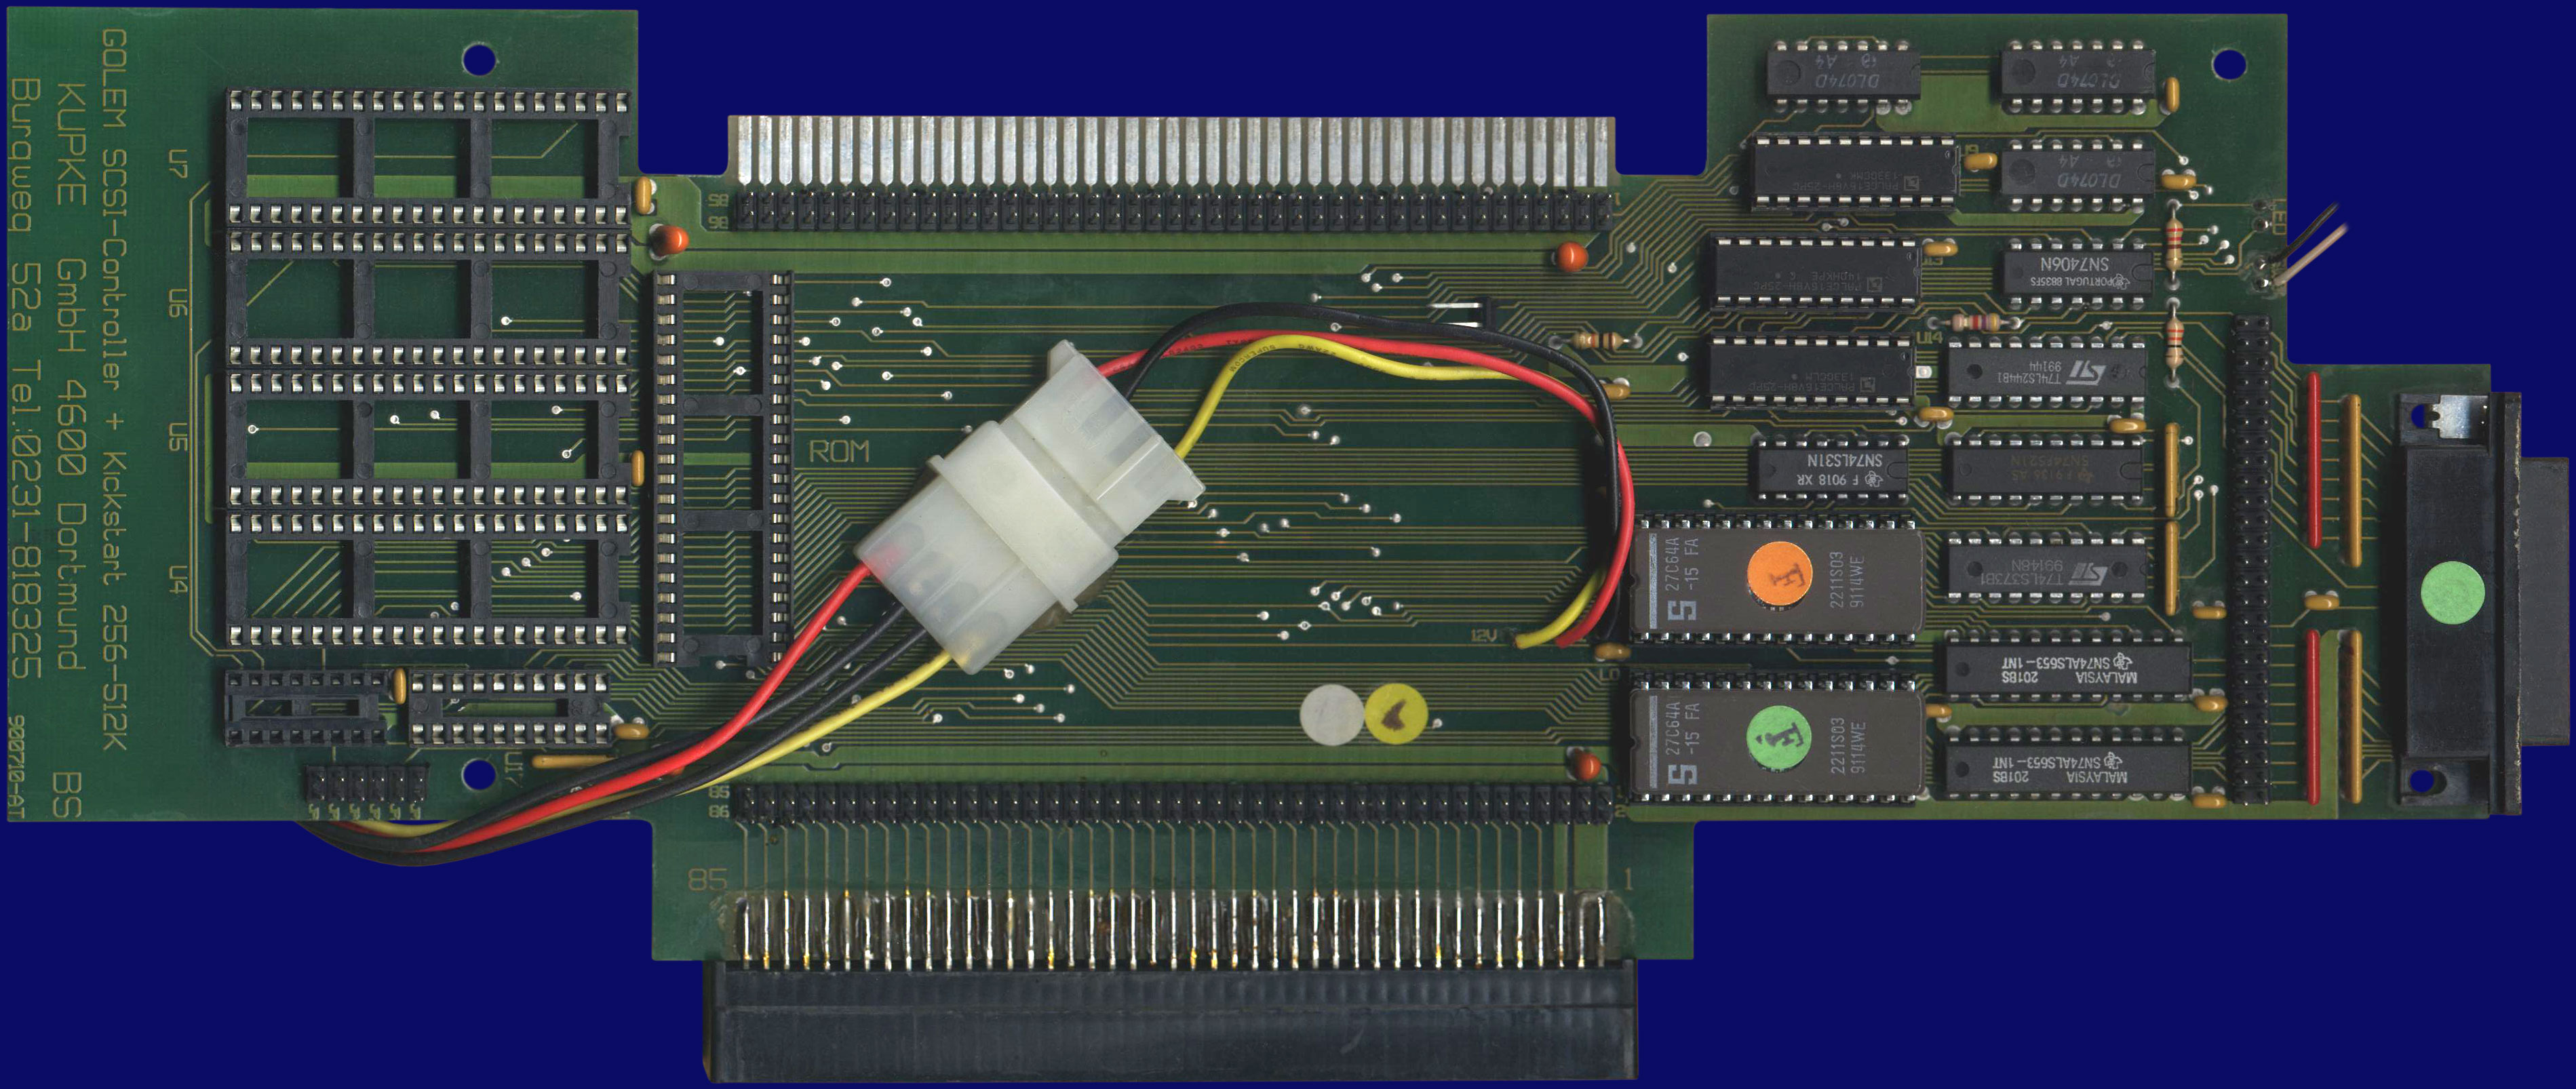 Kupke Golem SCSI II (A500) - Hauptkarte, Vorderseite